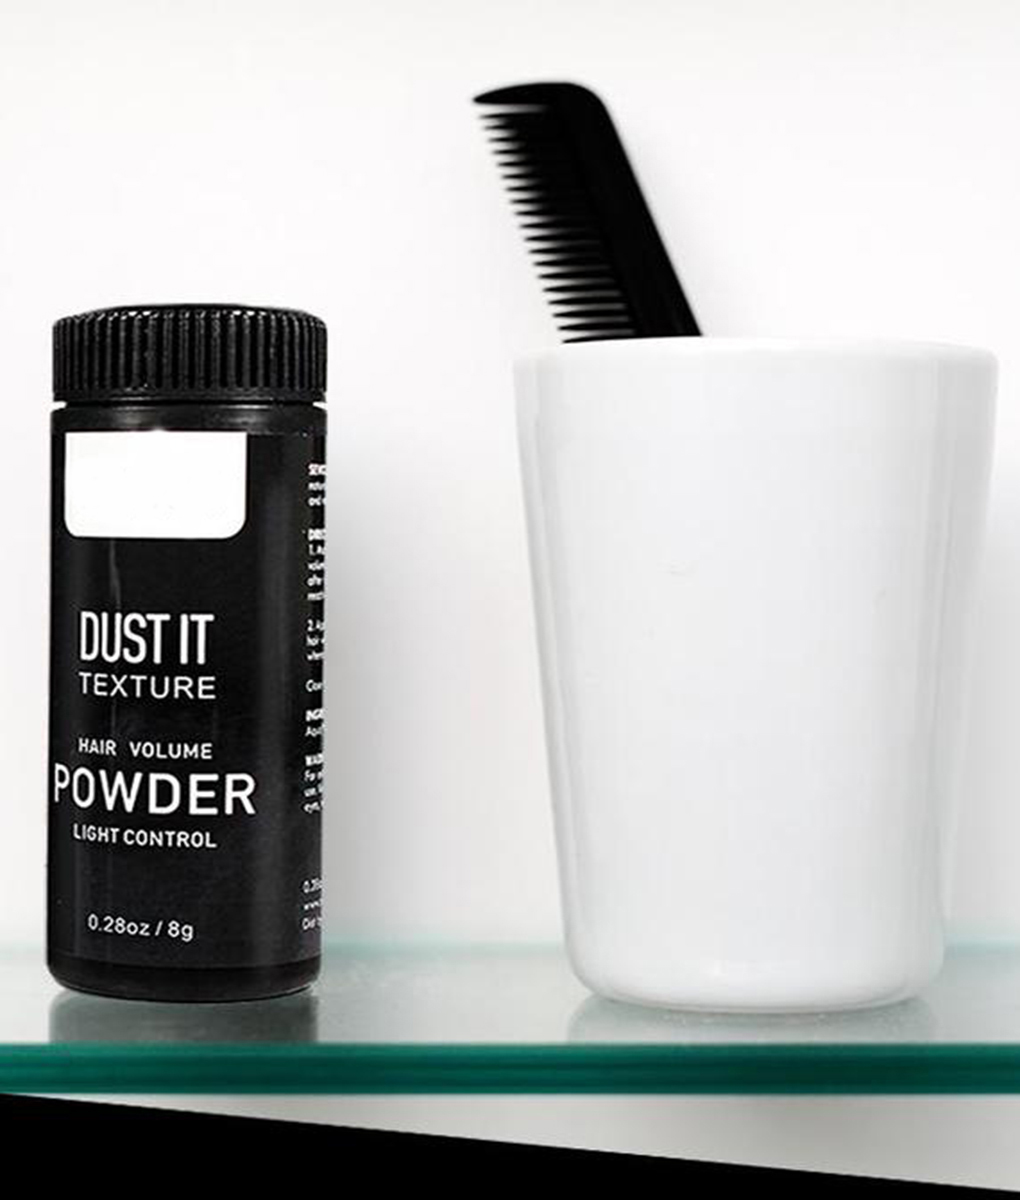 Hair Mattifying Powder - Not sold in stores